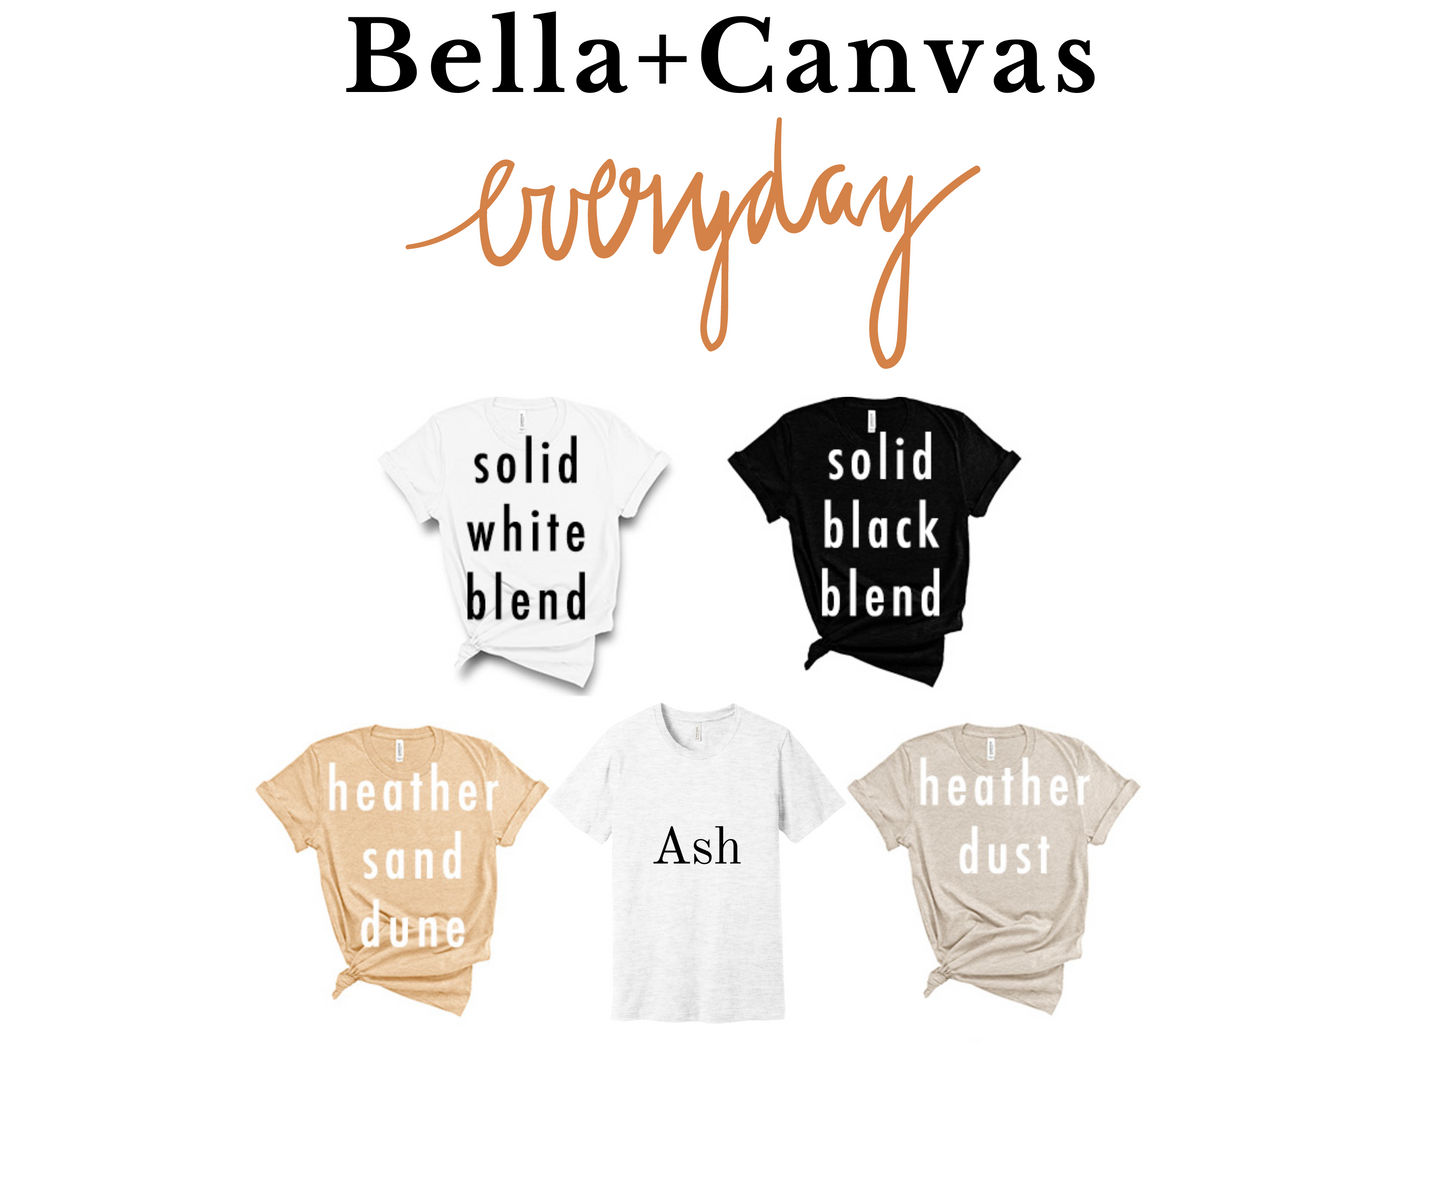 I Hate Pumpkin Spice Bella Canvas T-shirt